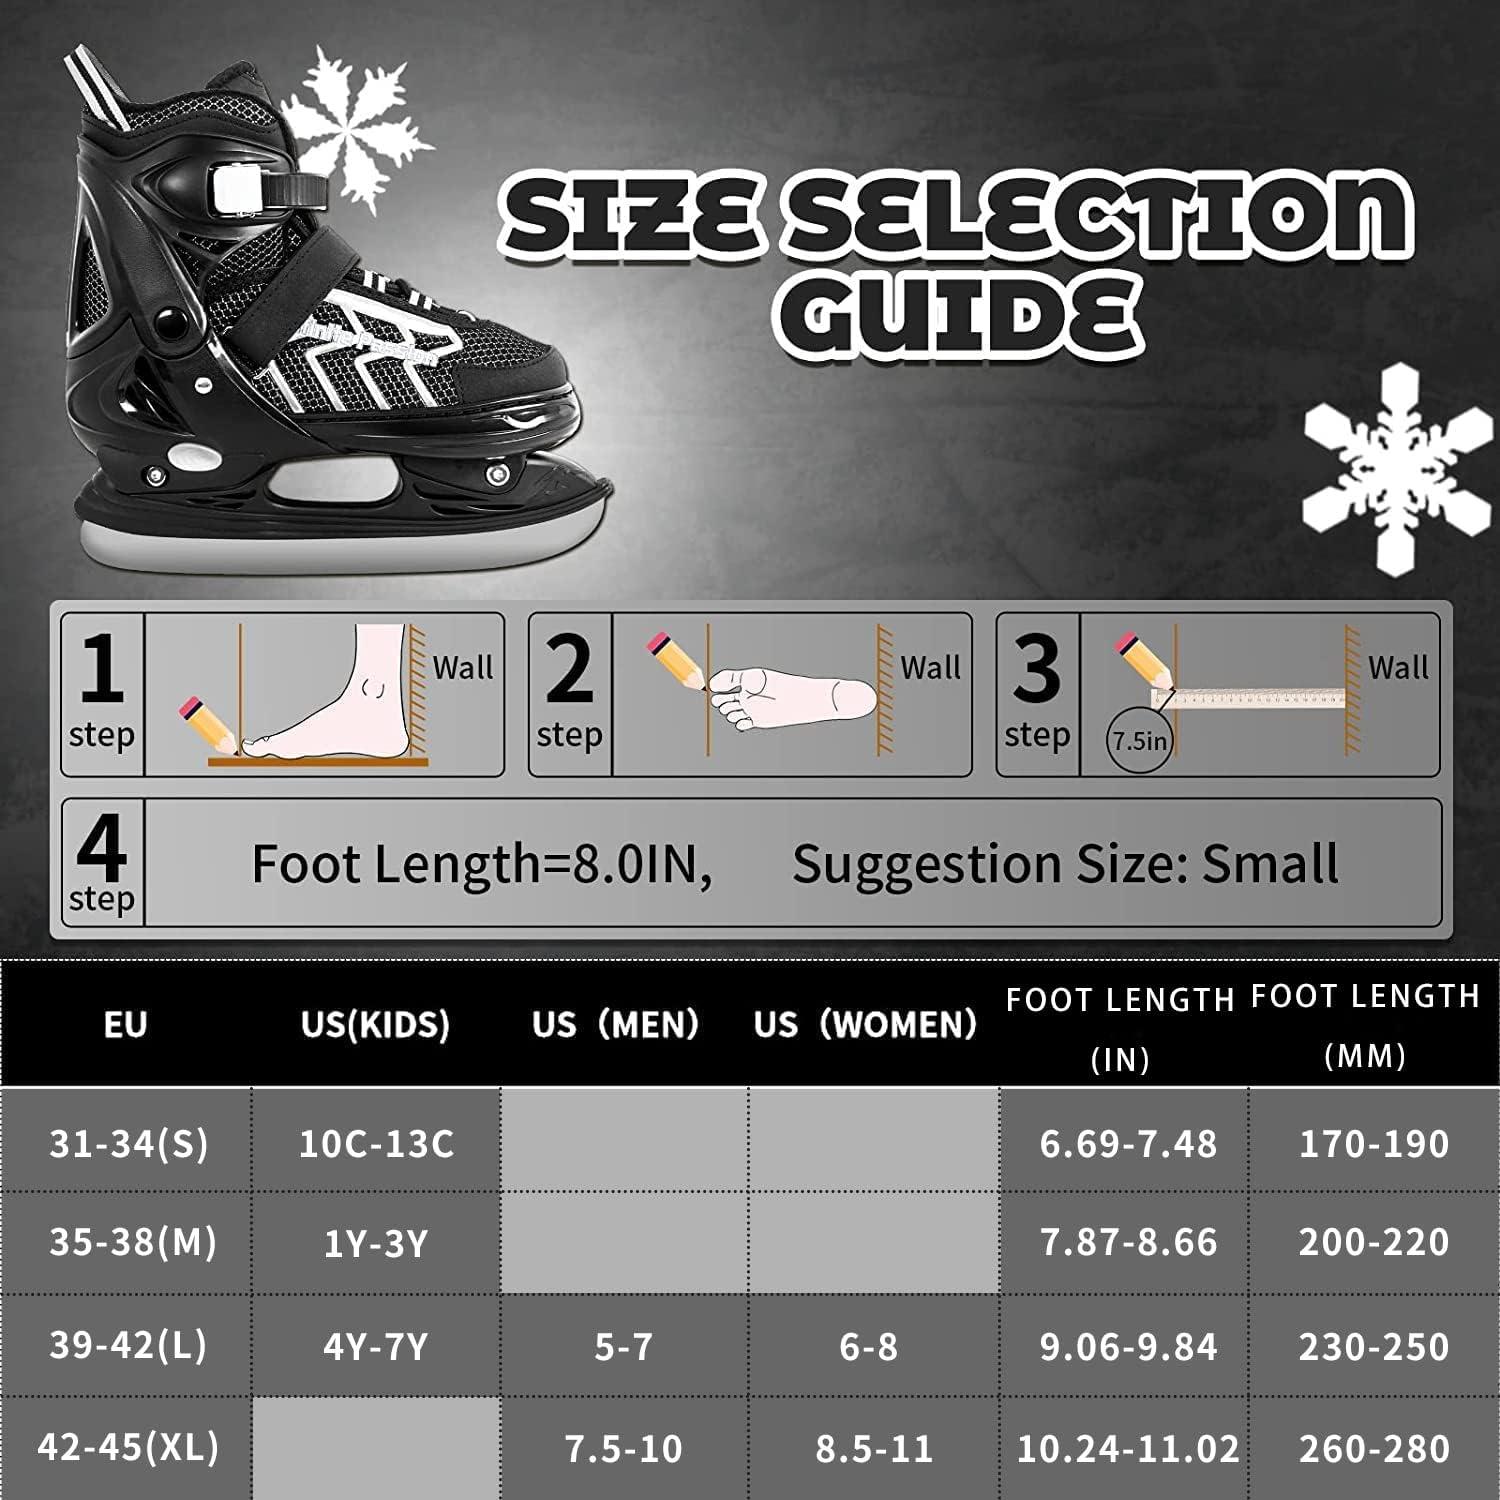 Nattork Adjustable Kids Ice Skate Shoes for Boys, Soft Padding and